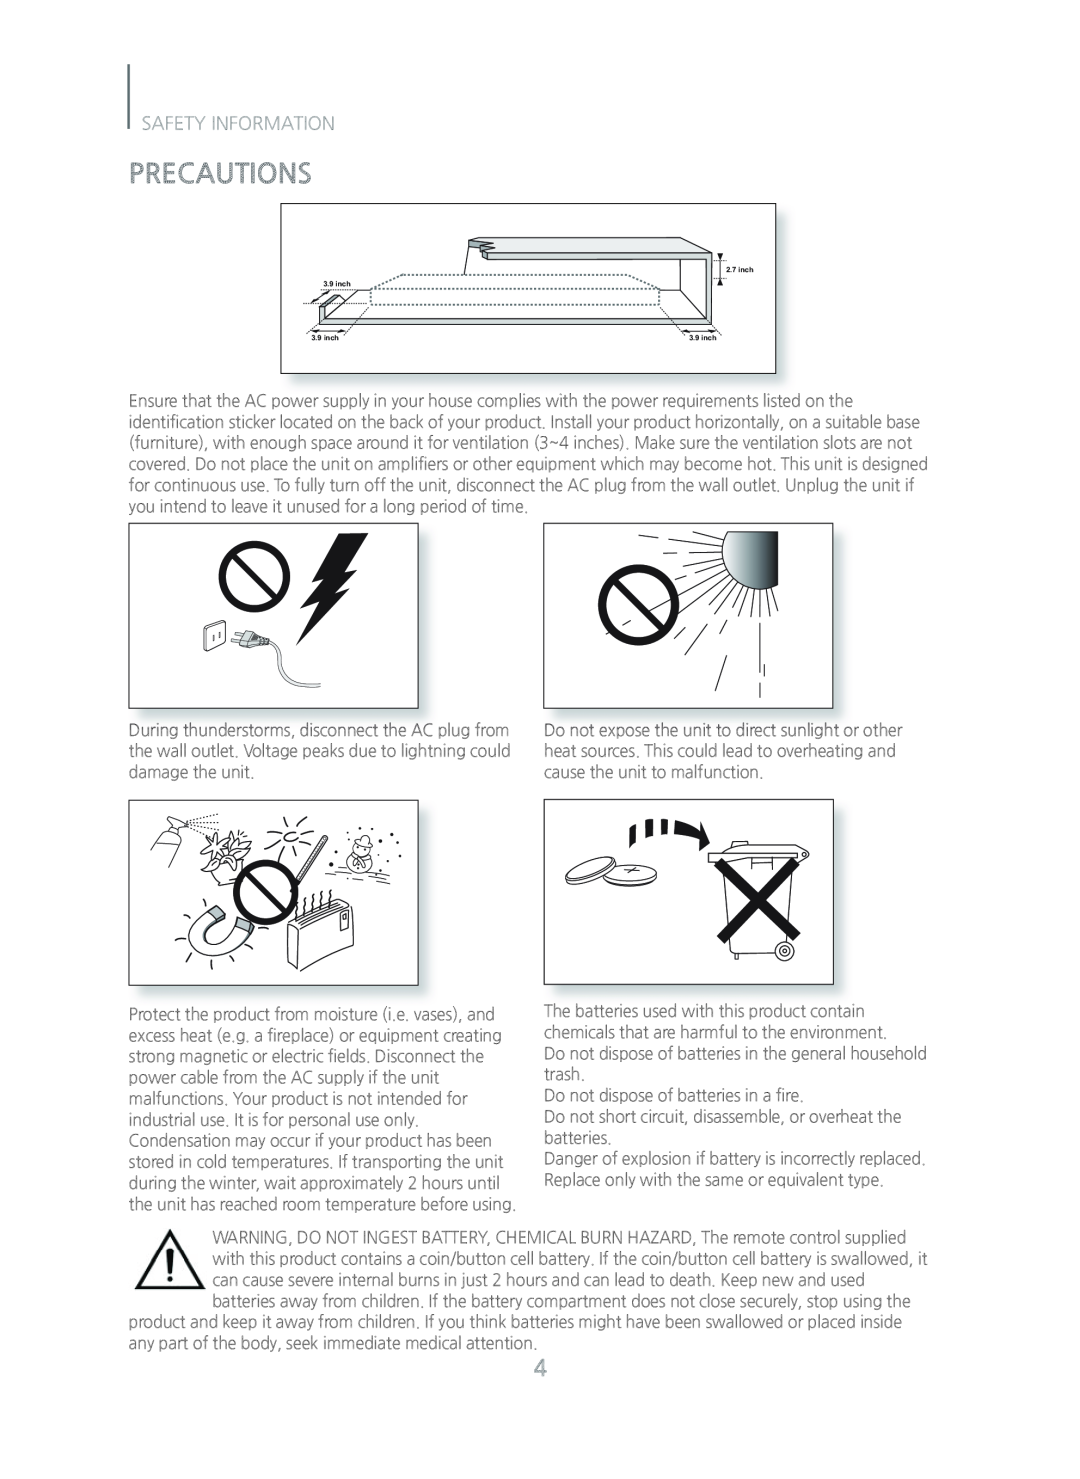 Samsung HW-H600/ZA manual Precautions, Safety Information 